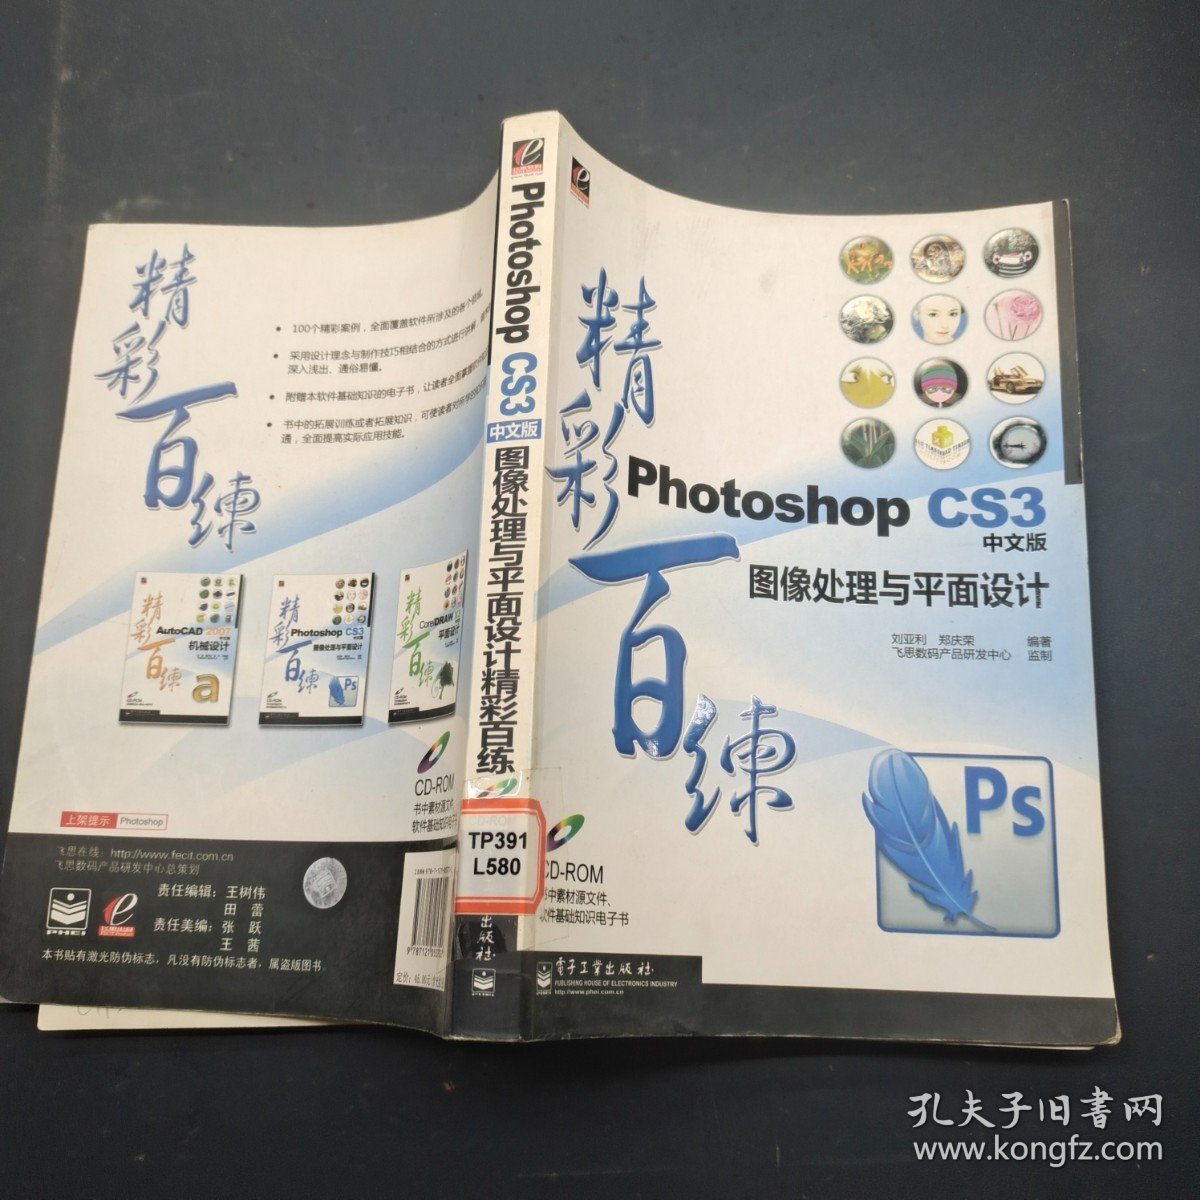 Photoshop CS3中文版图像处理与平面设计精彩百练